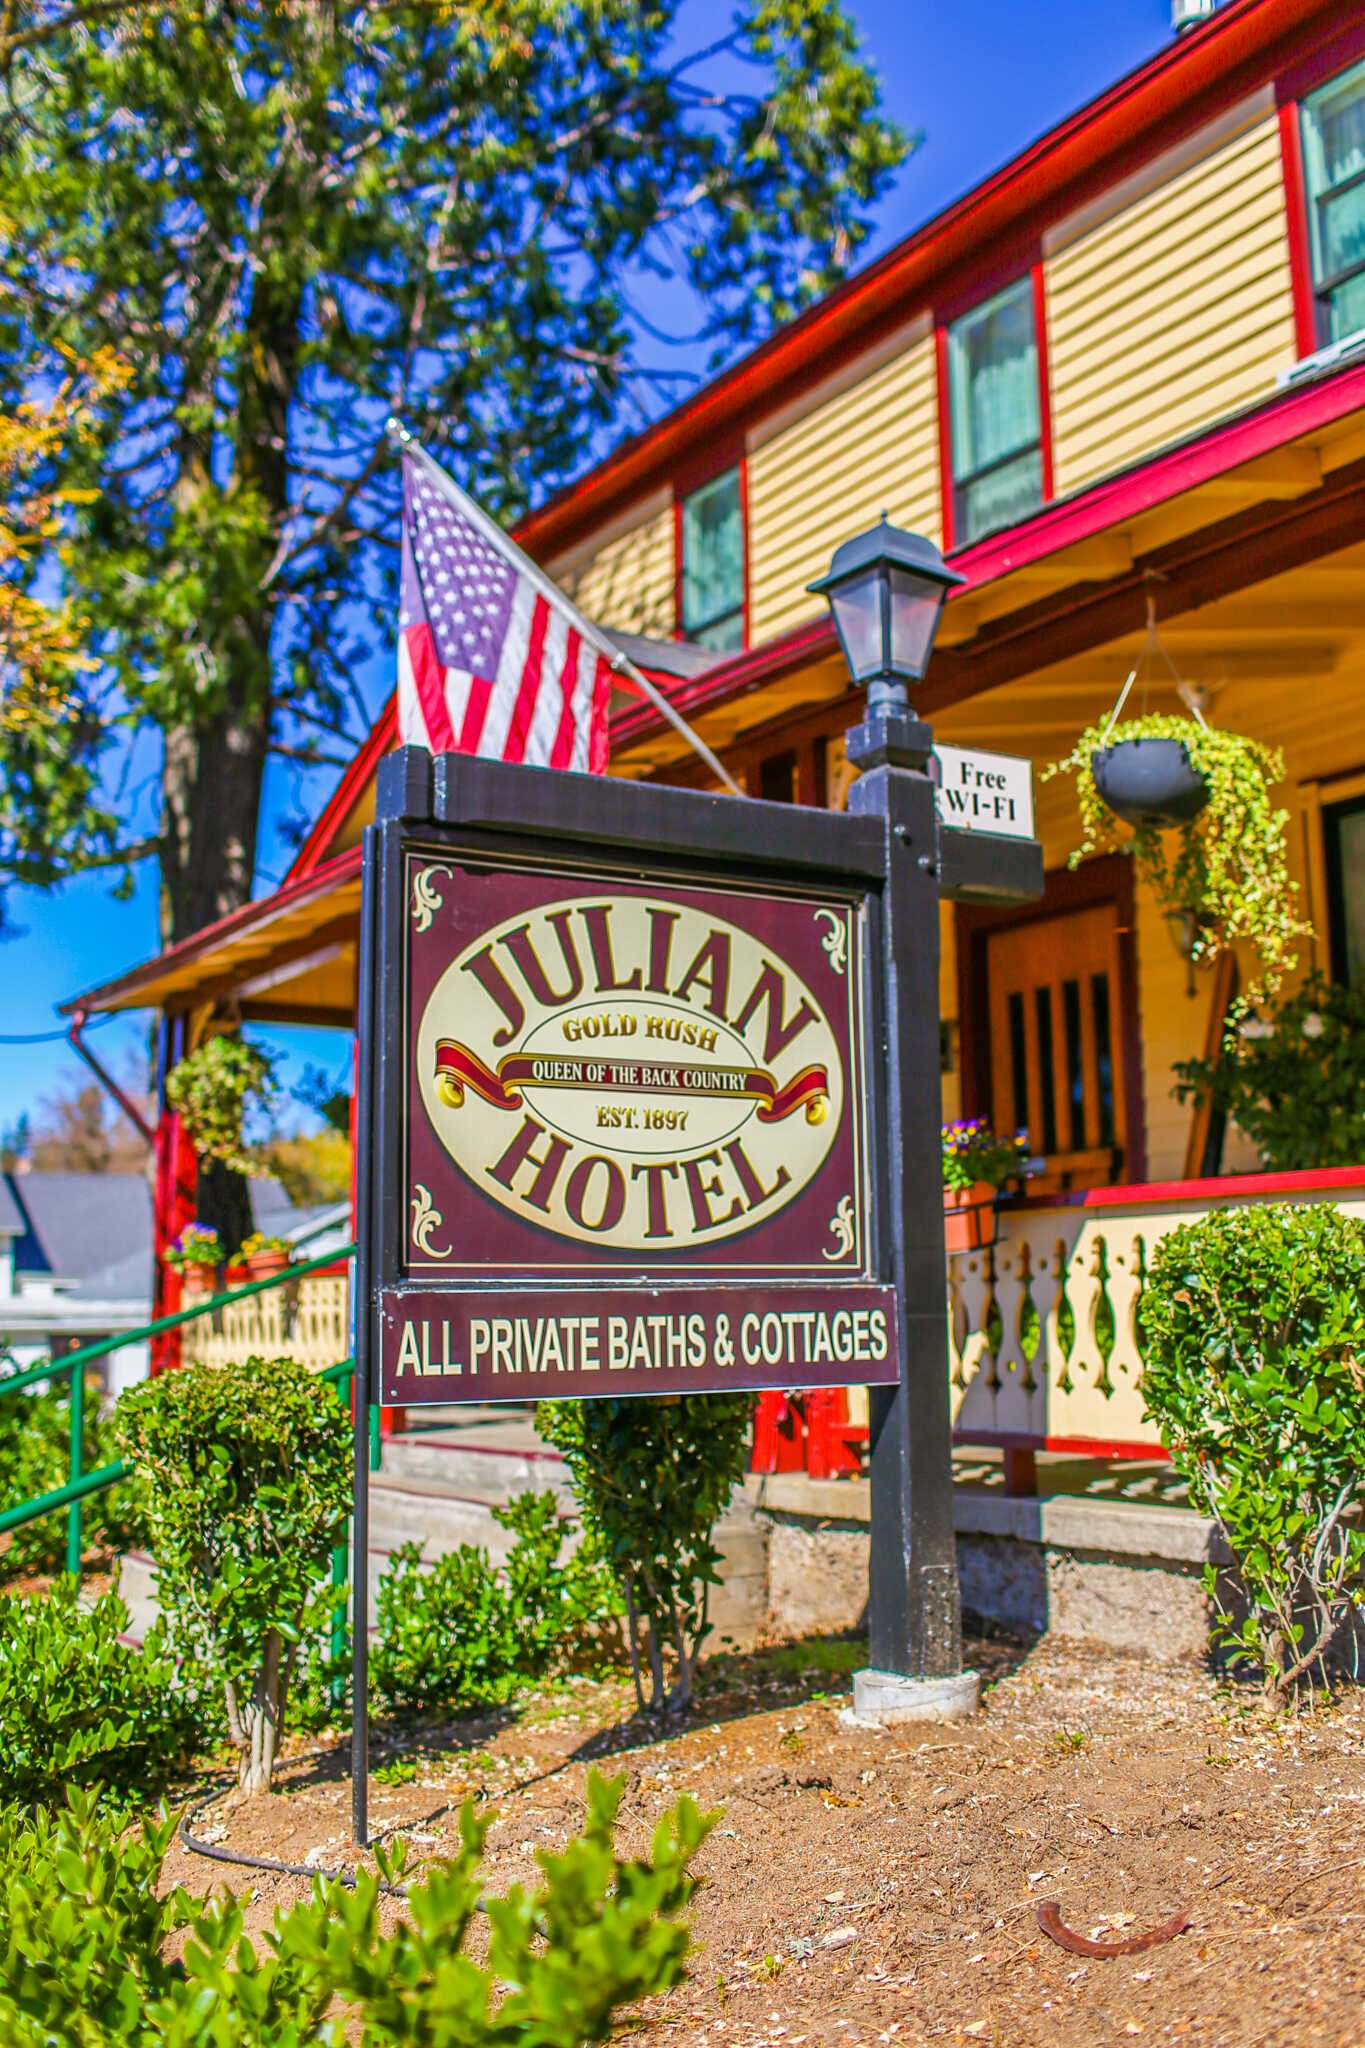 The Complete Travel Guide to Julian, California - The Julian Gold Rush Hotel.